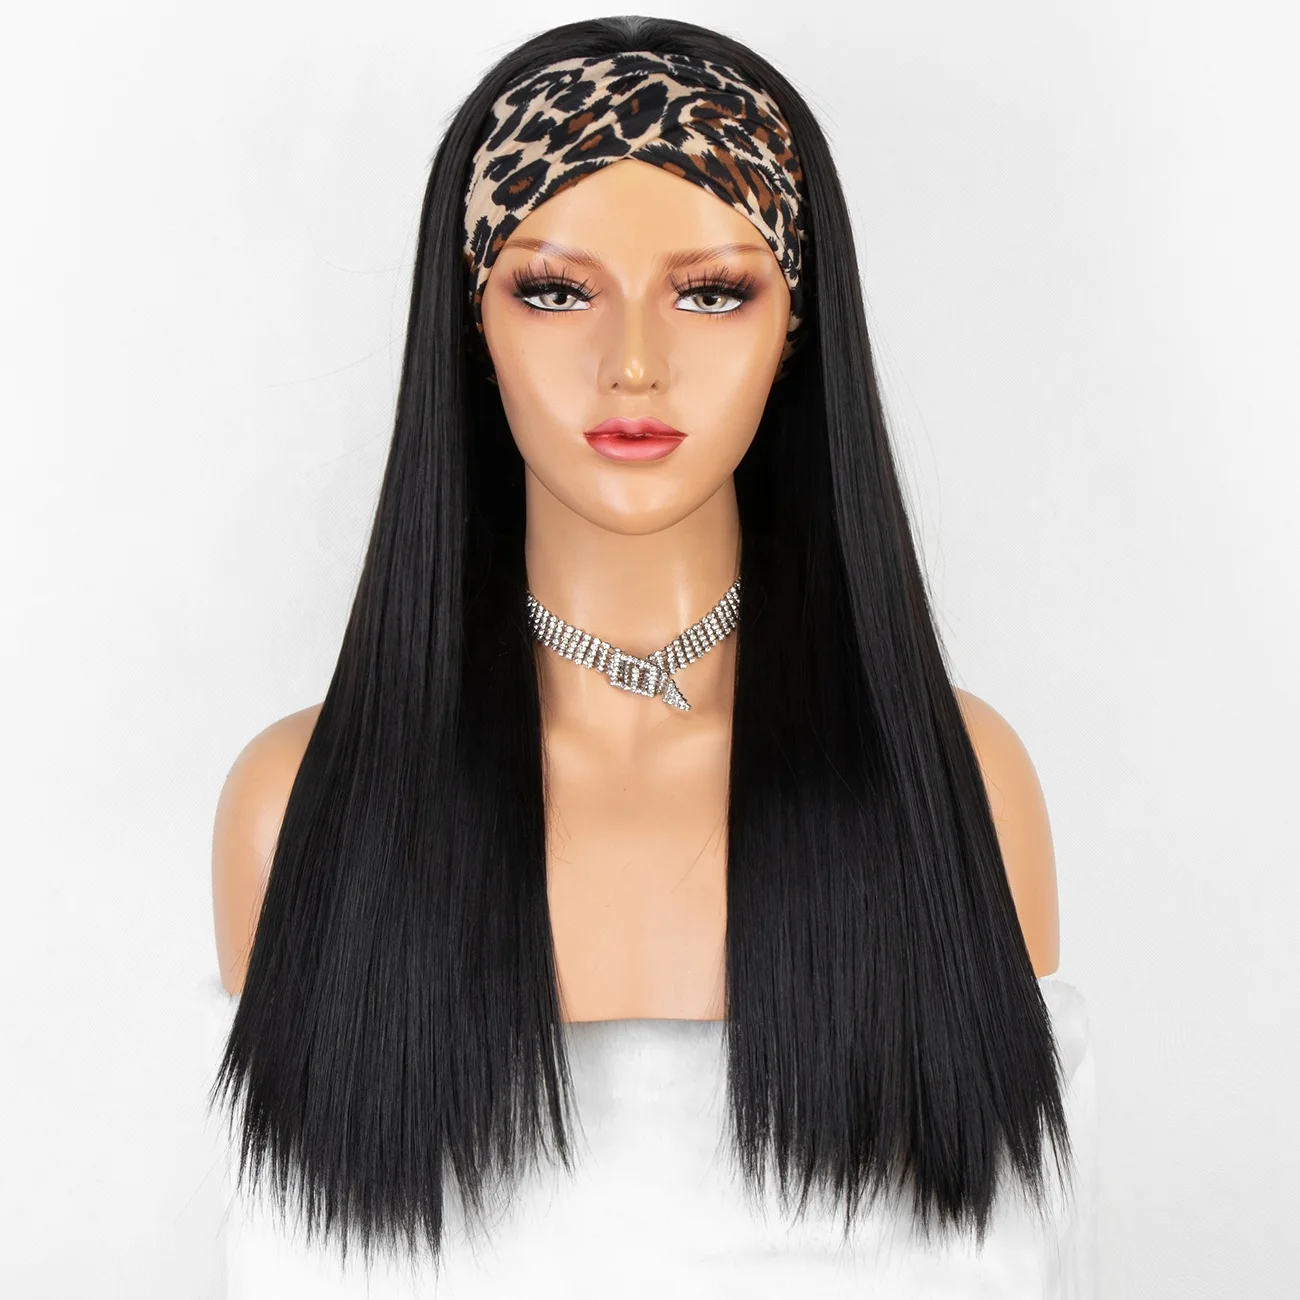 

Aliblisswig Natural Looking Long Wavy Dark Brown Heat Resistant Headwraps Wigs High Density Glueless Synthetic Headband Wig, Black